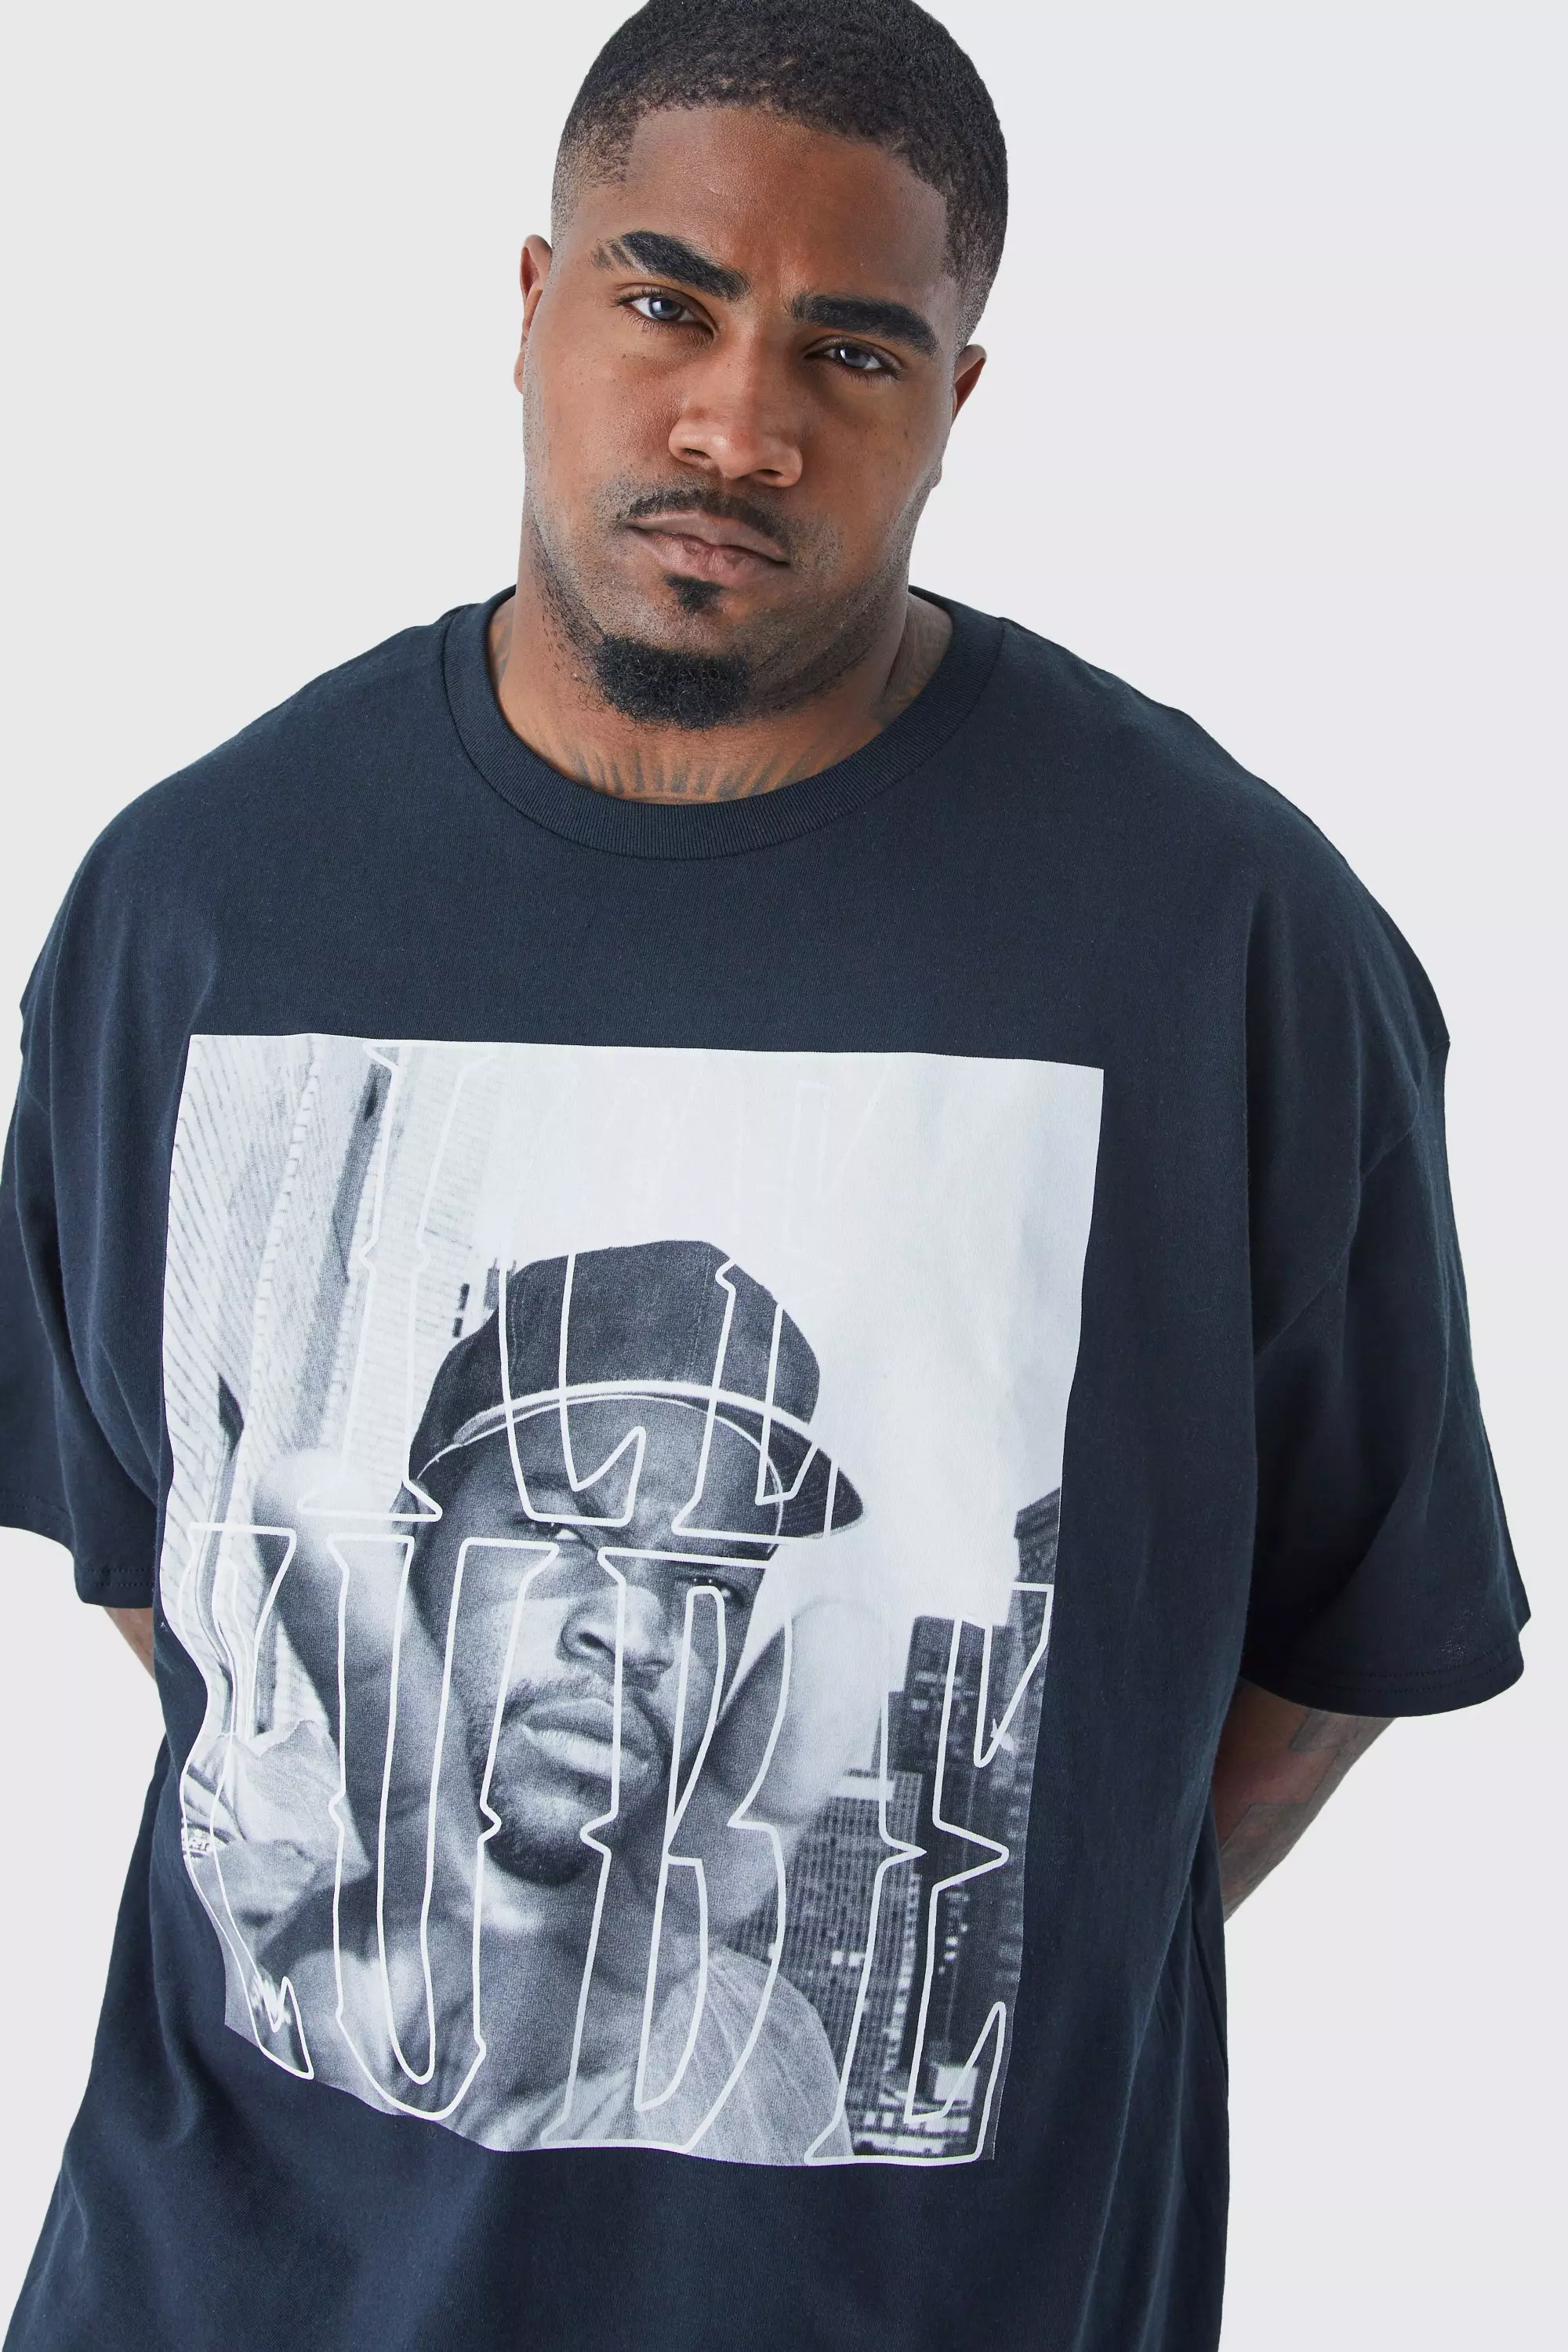 Plus Size Ice Cube Chest Print License T-shirt Black